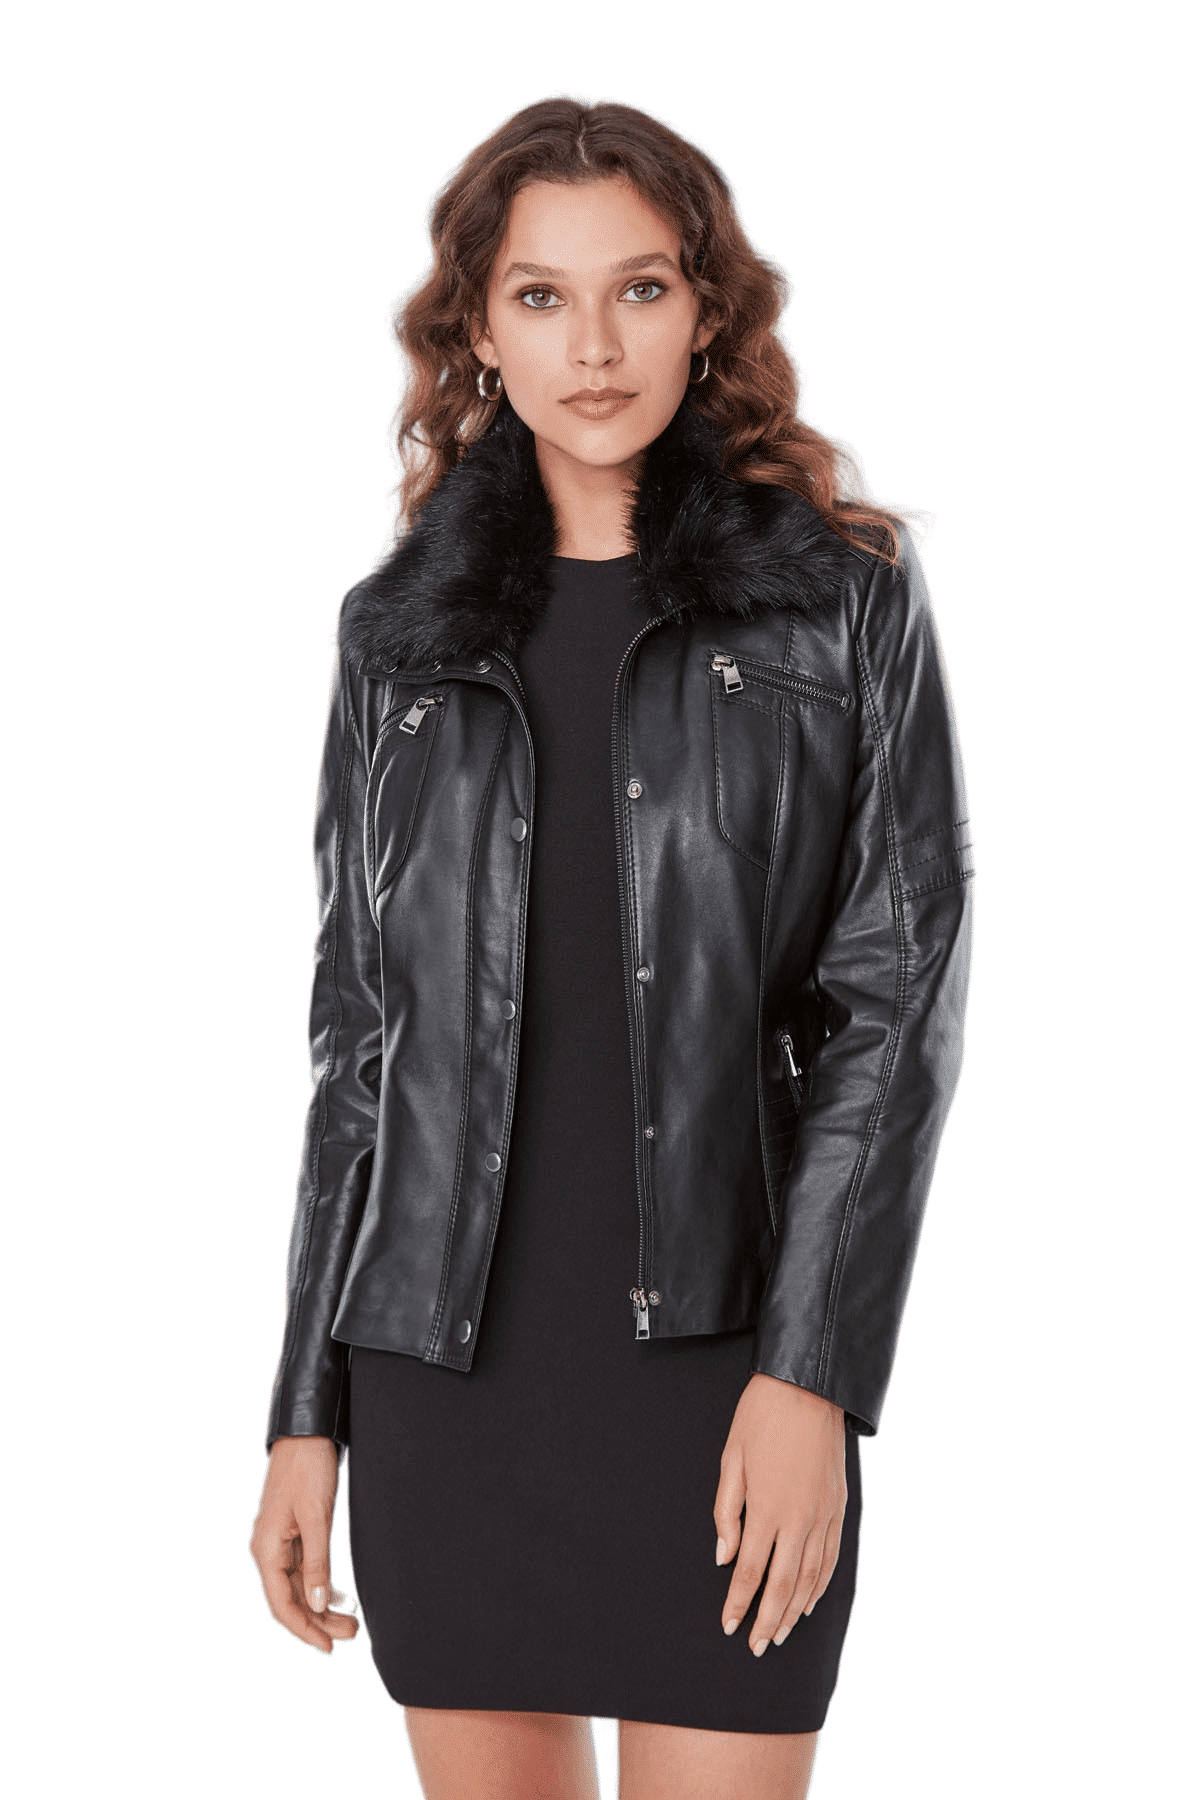 Belinda Black Fur Collar Stylish Women's Leather Jacket